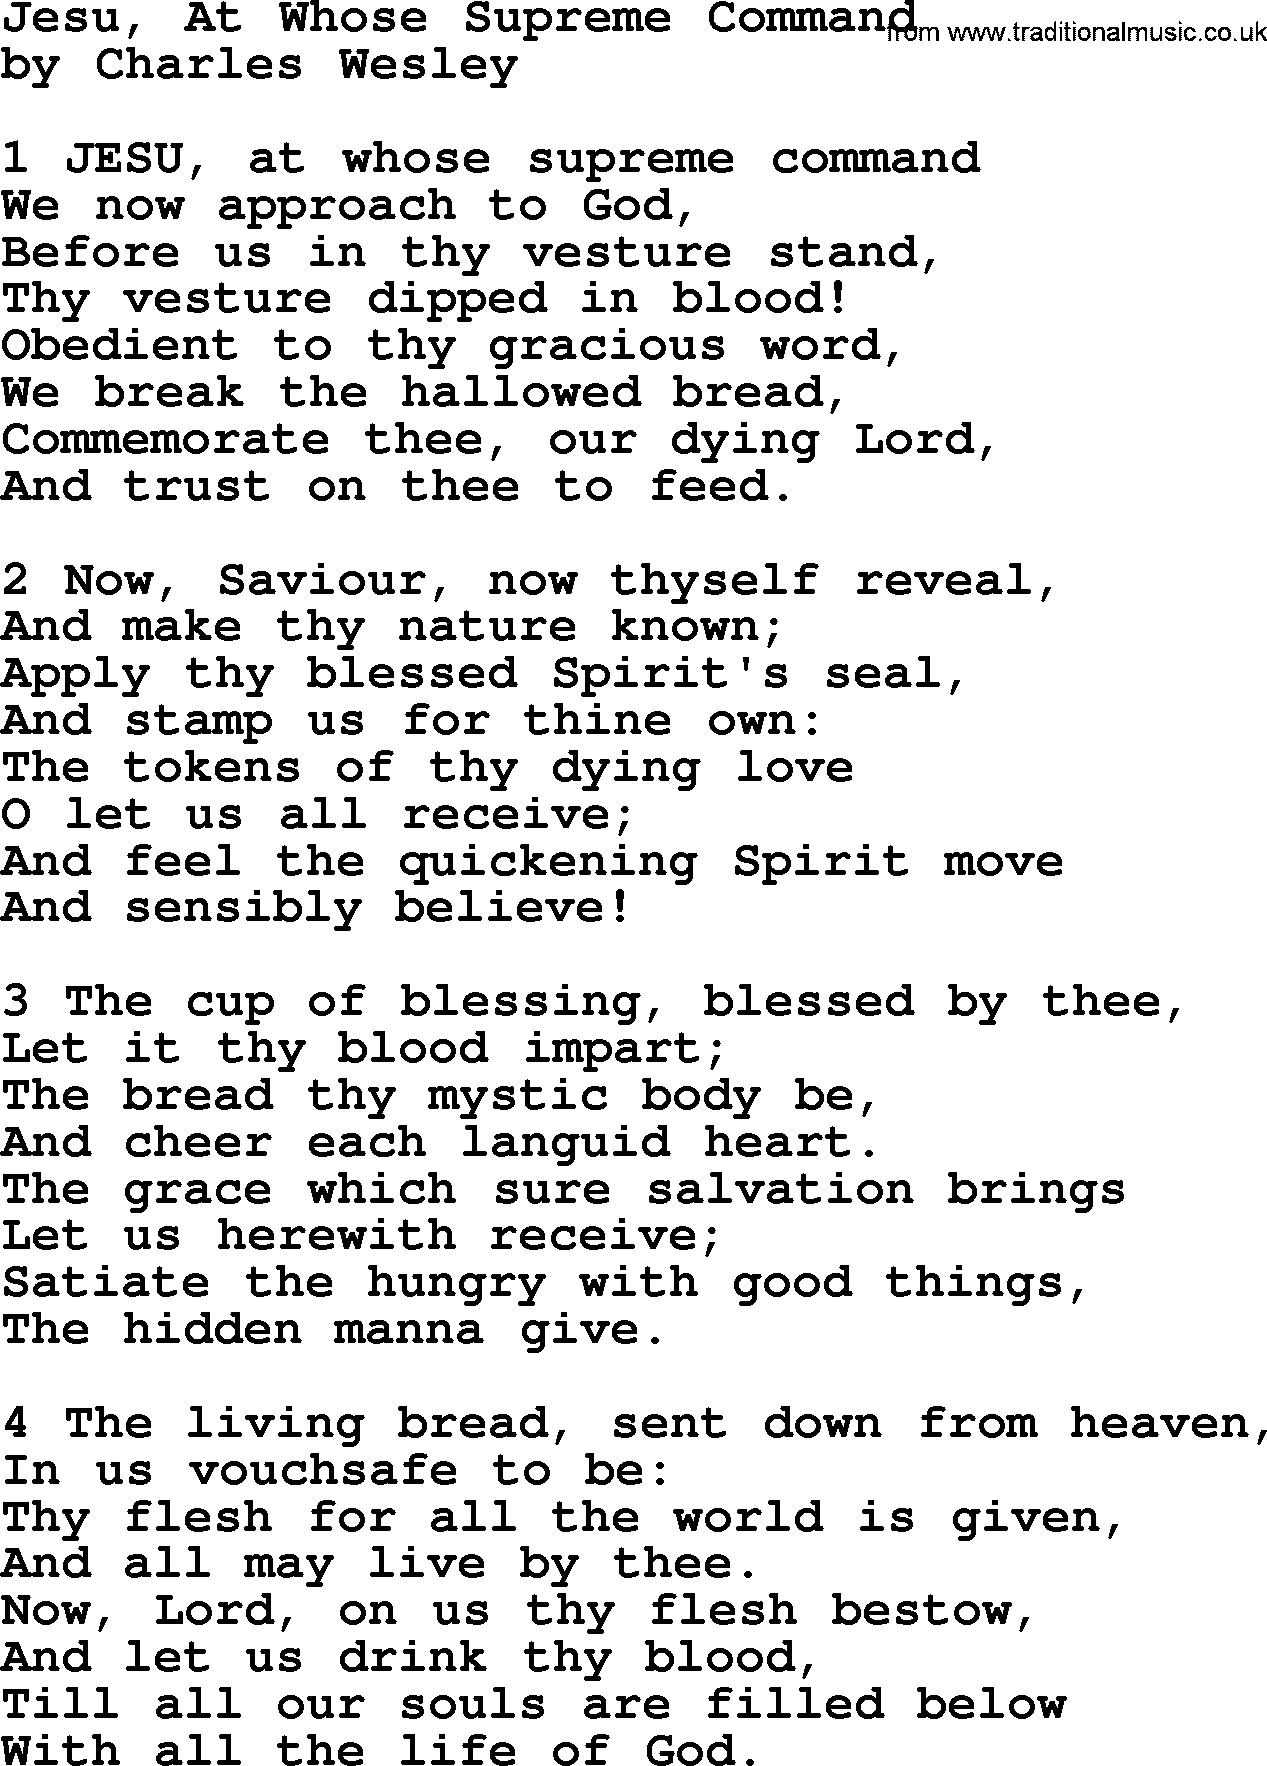 Charles Wesley hymn: Jesu, At Whose Supreme Command, lyrics